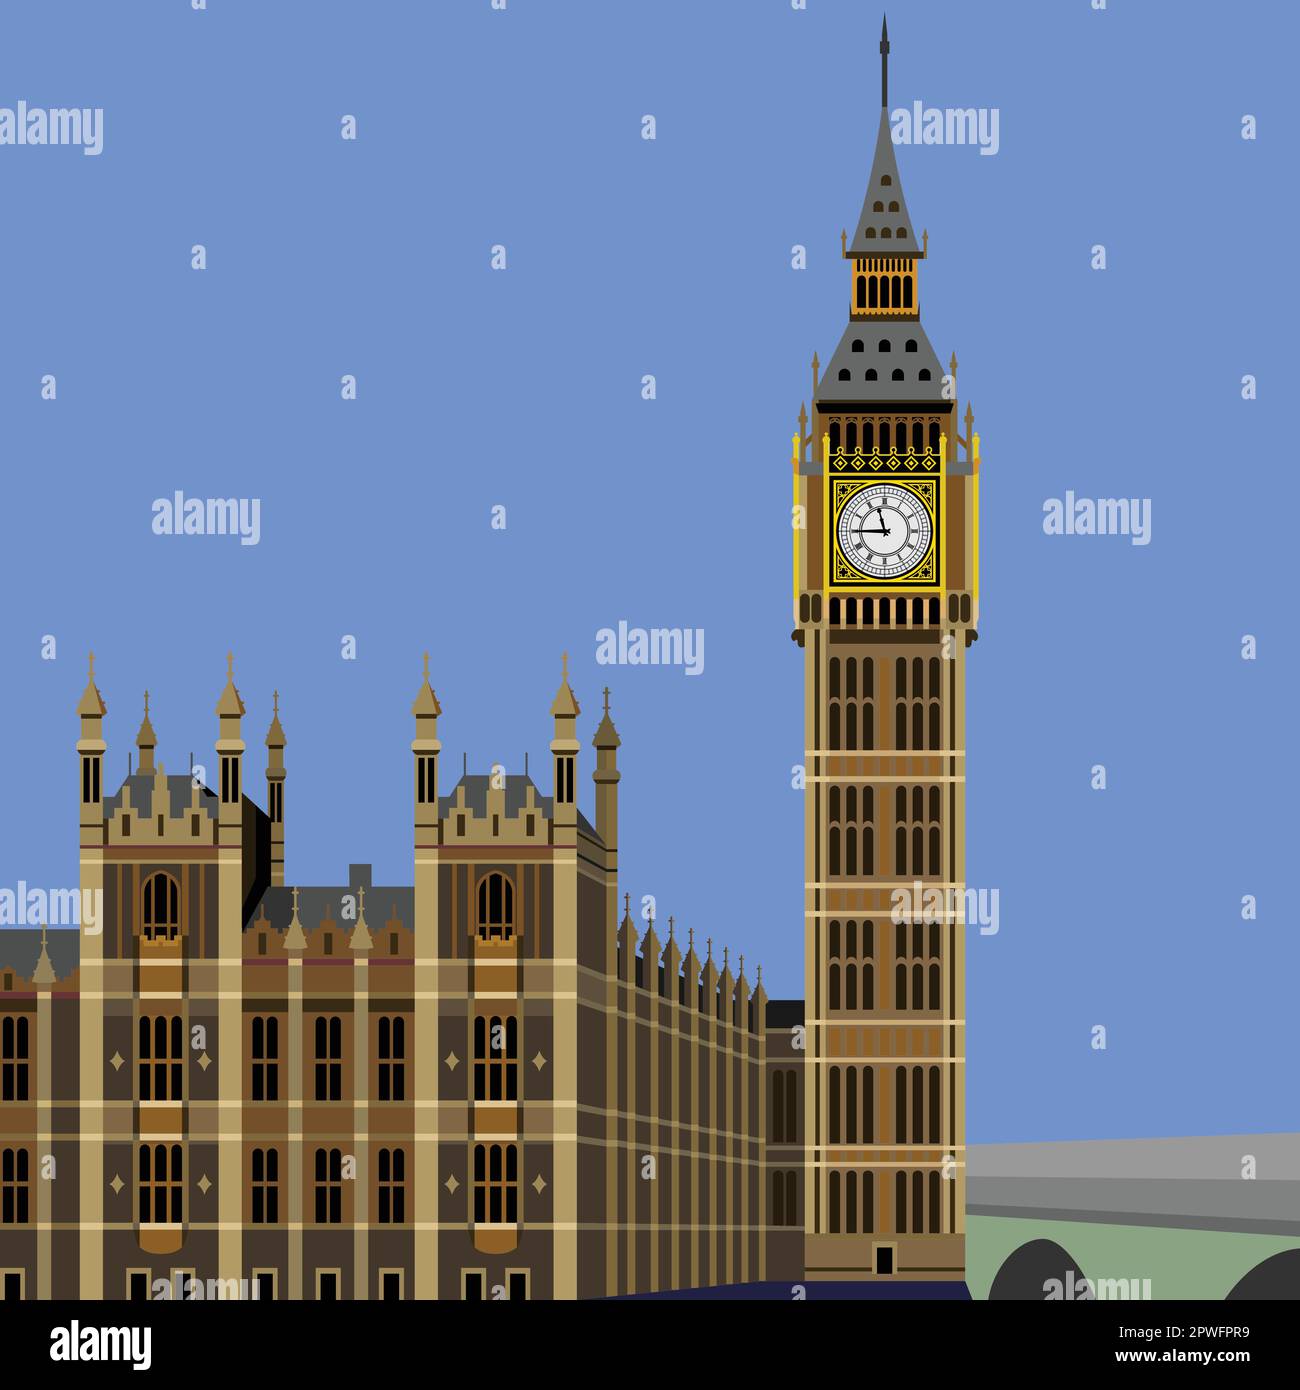 Big Ben London United Kingdom Landmark Vector Stock Vector Image & Art ...